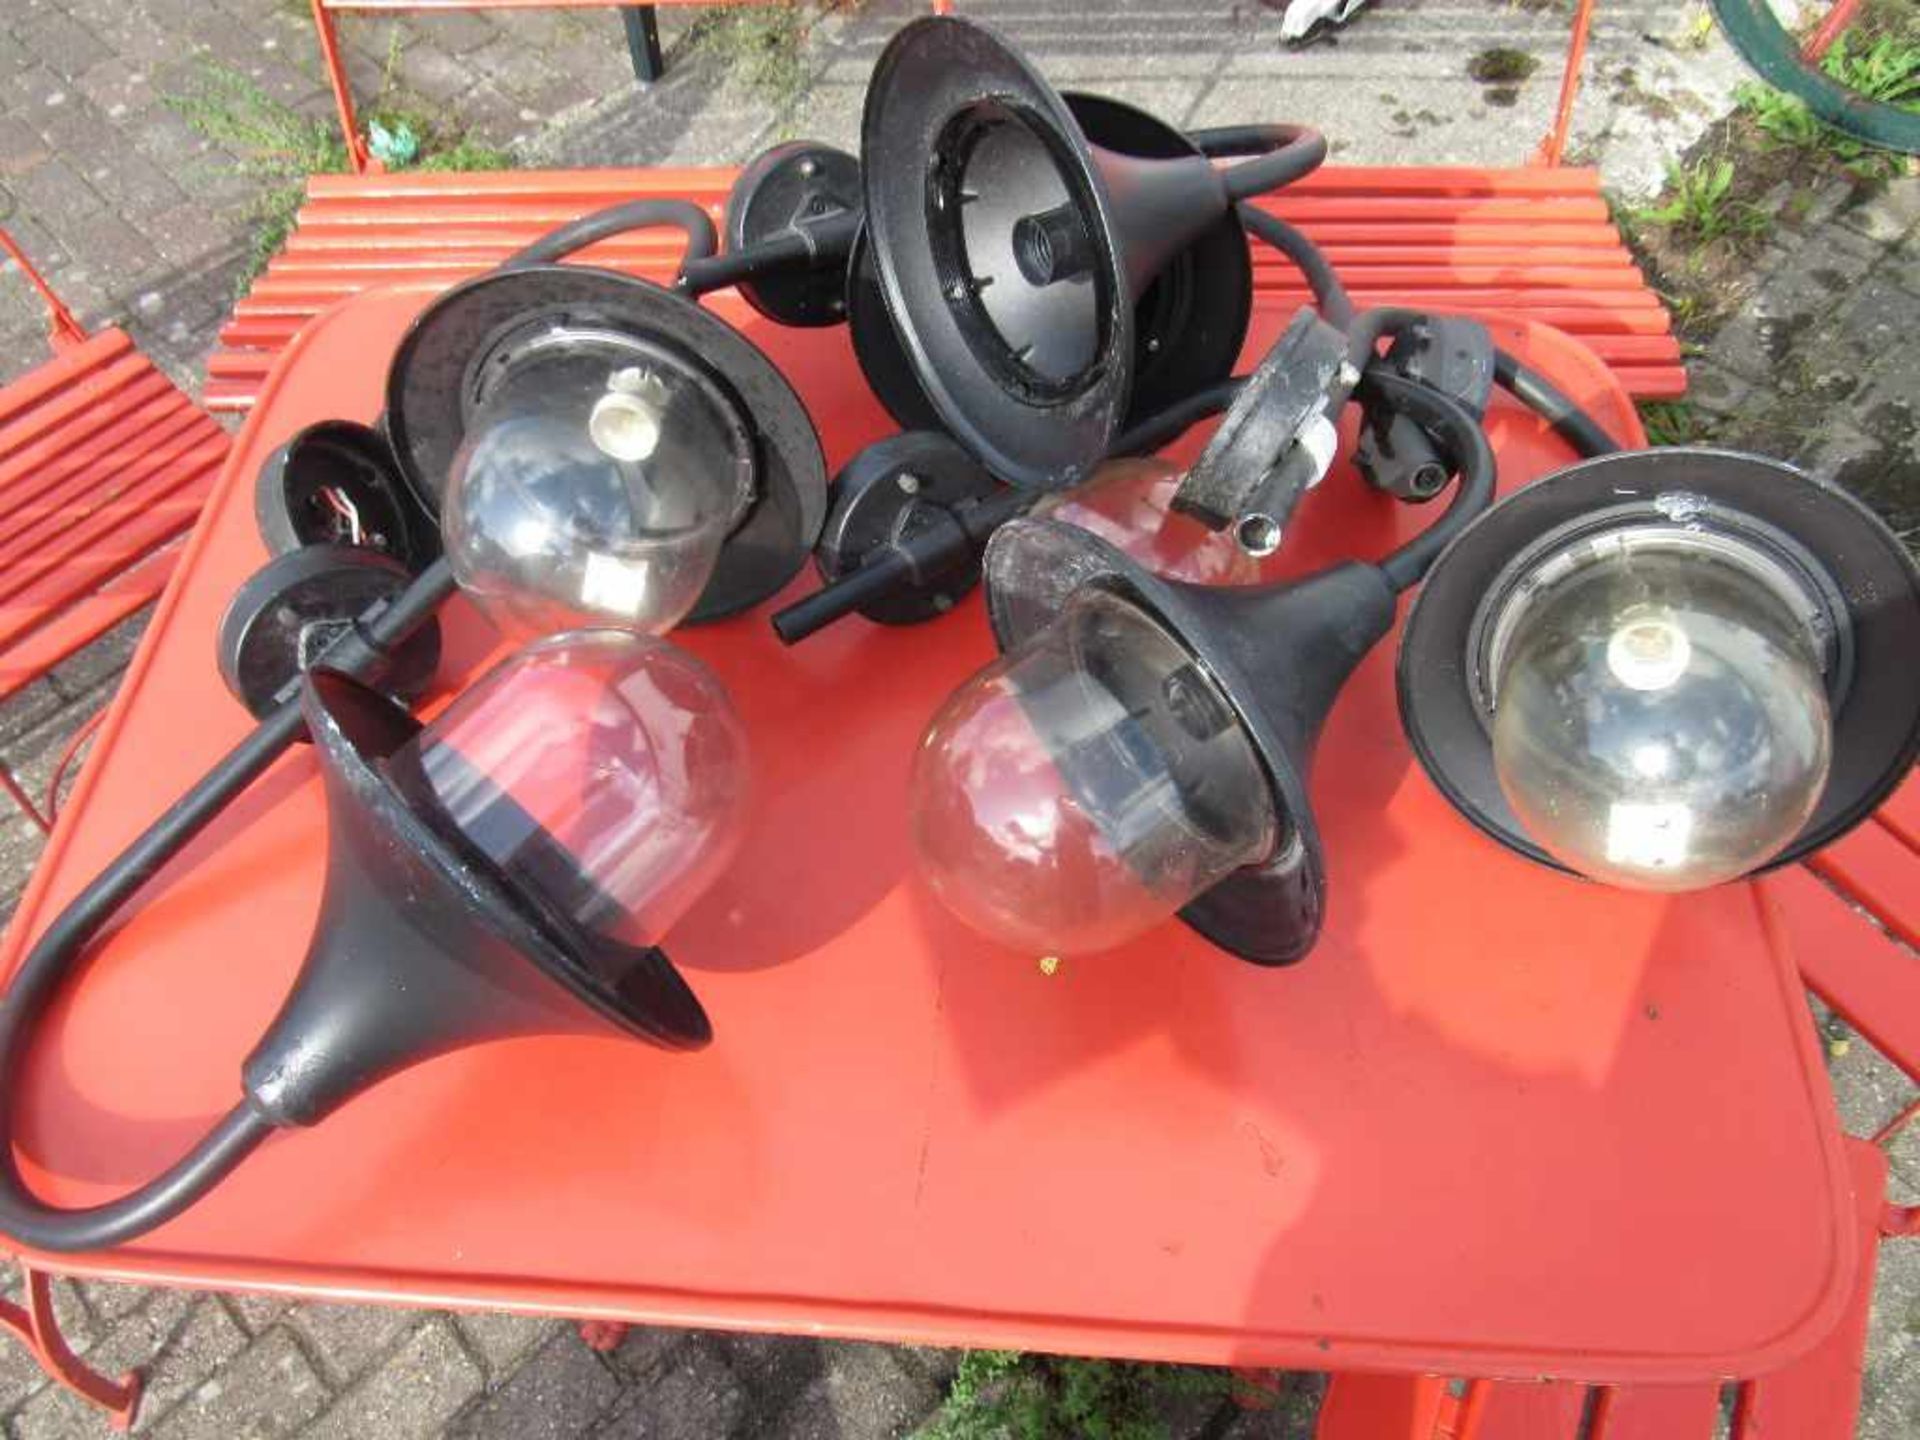 Fünf Außenlaternen Metall Stall-Lampen- - -20.00 % buyer's premium on the hammer price19.00 % VAT on